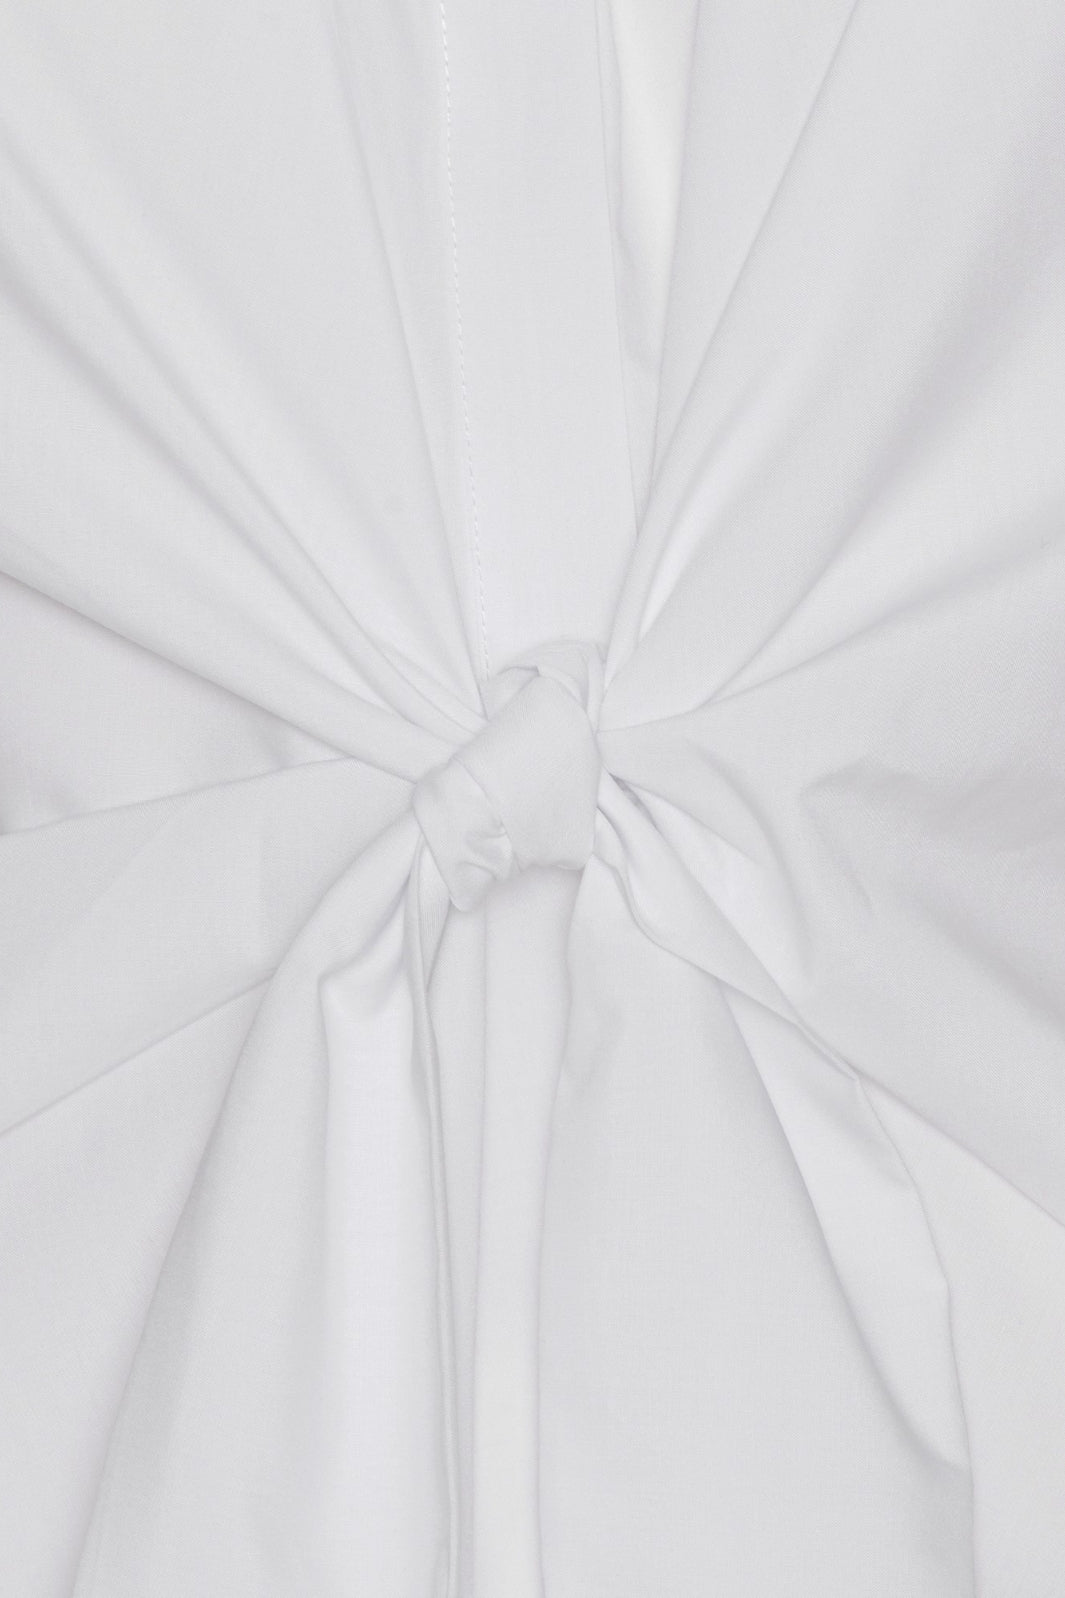 Forudbestilling - Karmamia - Lee Shirt - White Cotton (Midt August) Skjorter 